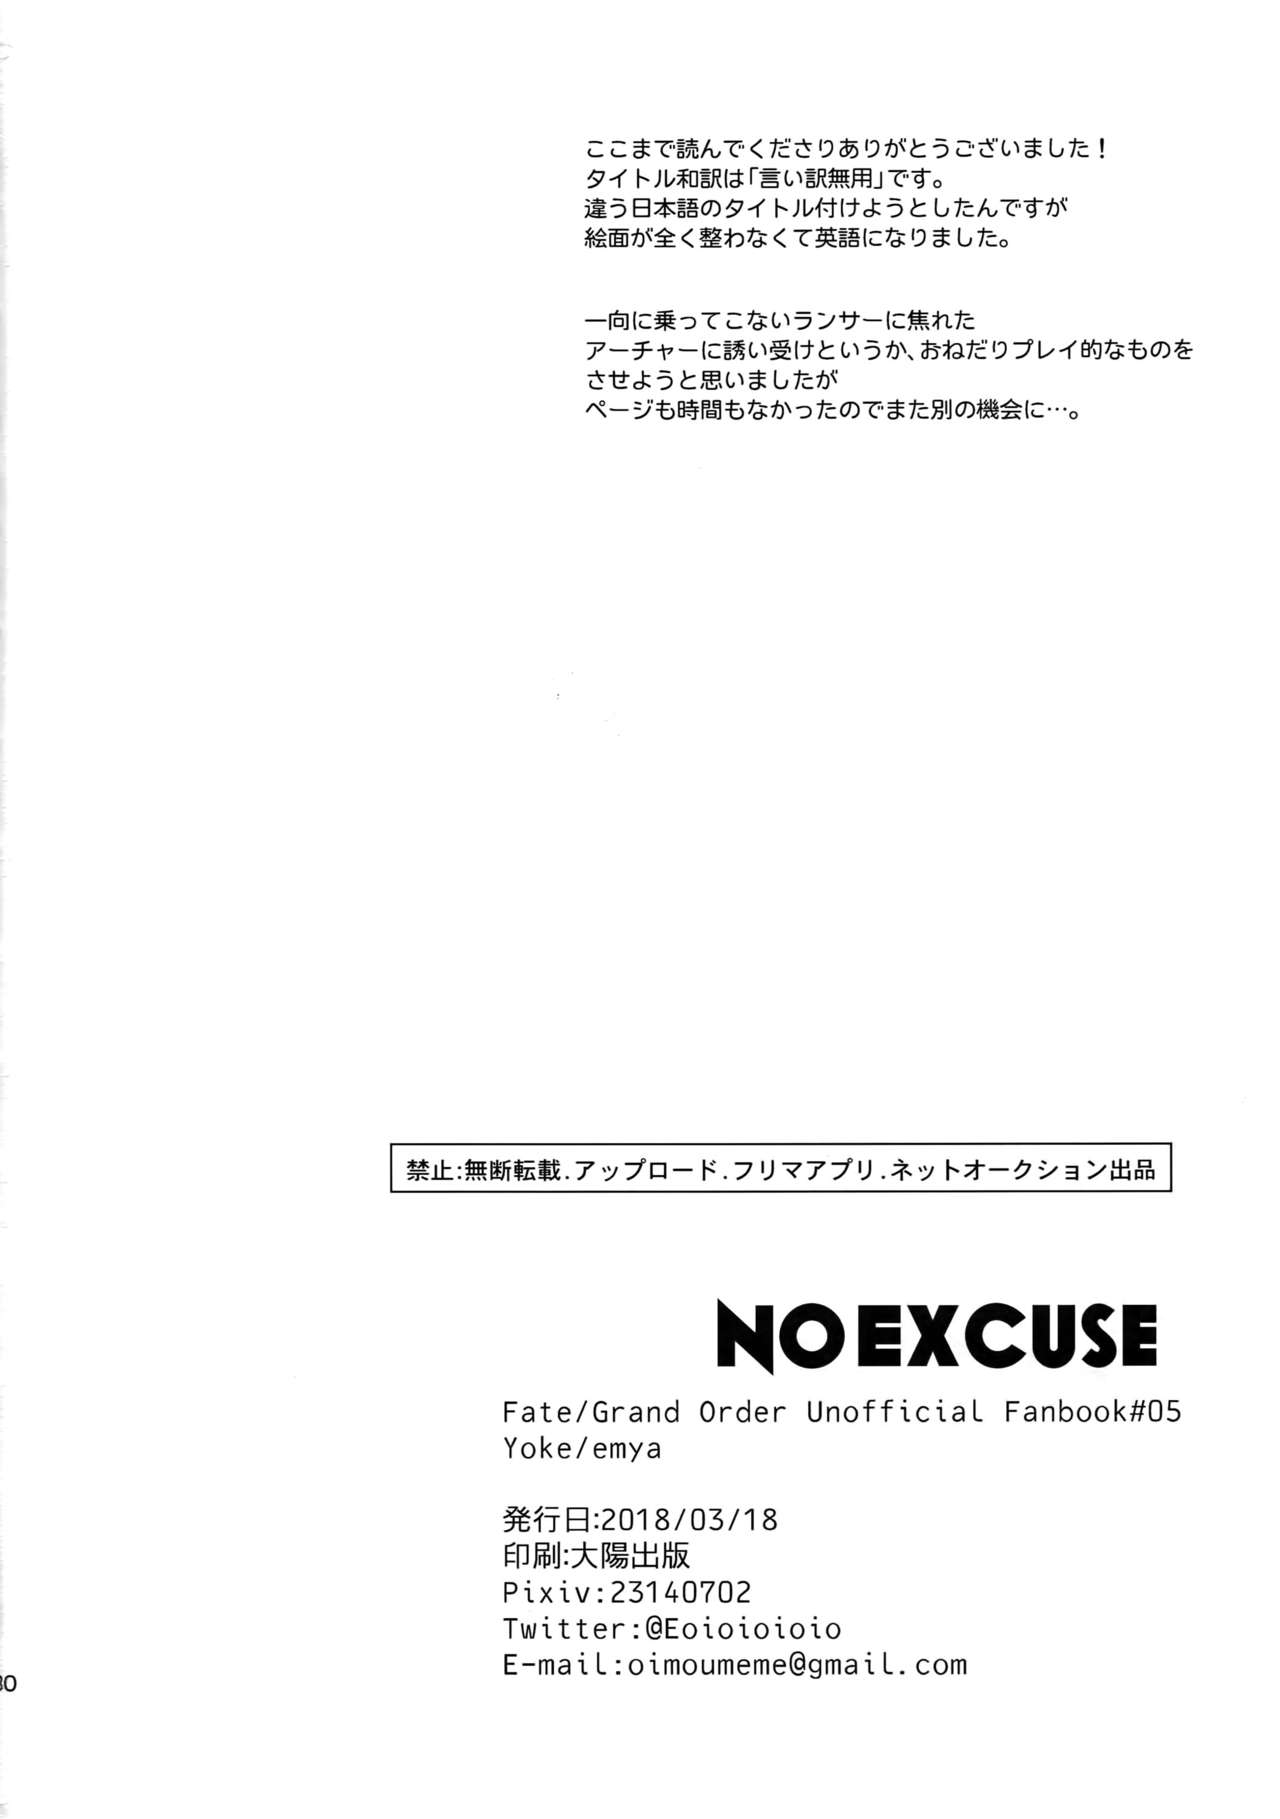 (HaruCC23) [Yoke (emya)] NO EXCUSE (Fate/Grand Order) 28